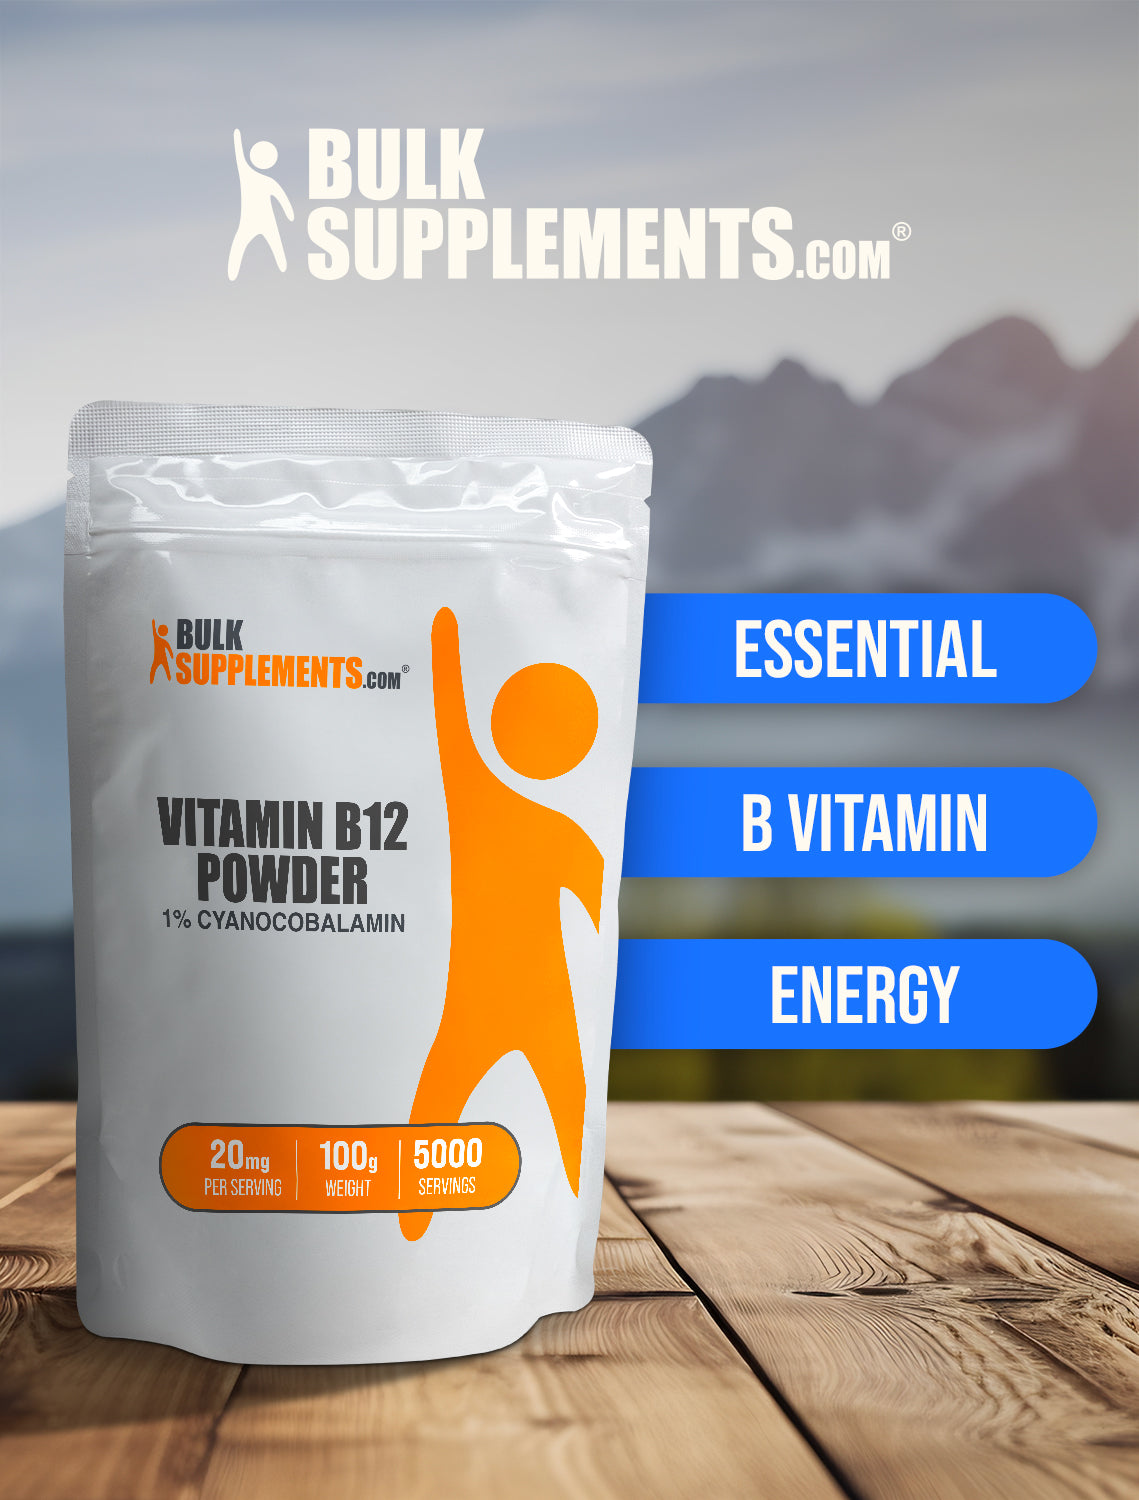 Vitamin B12 1% Cyanocobalamin powder keyword image 100g